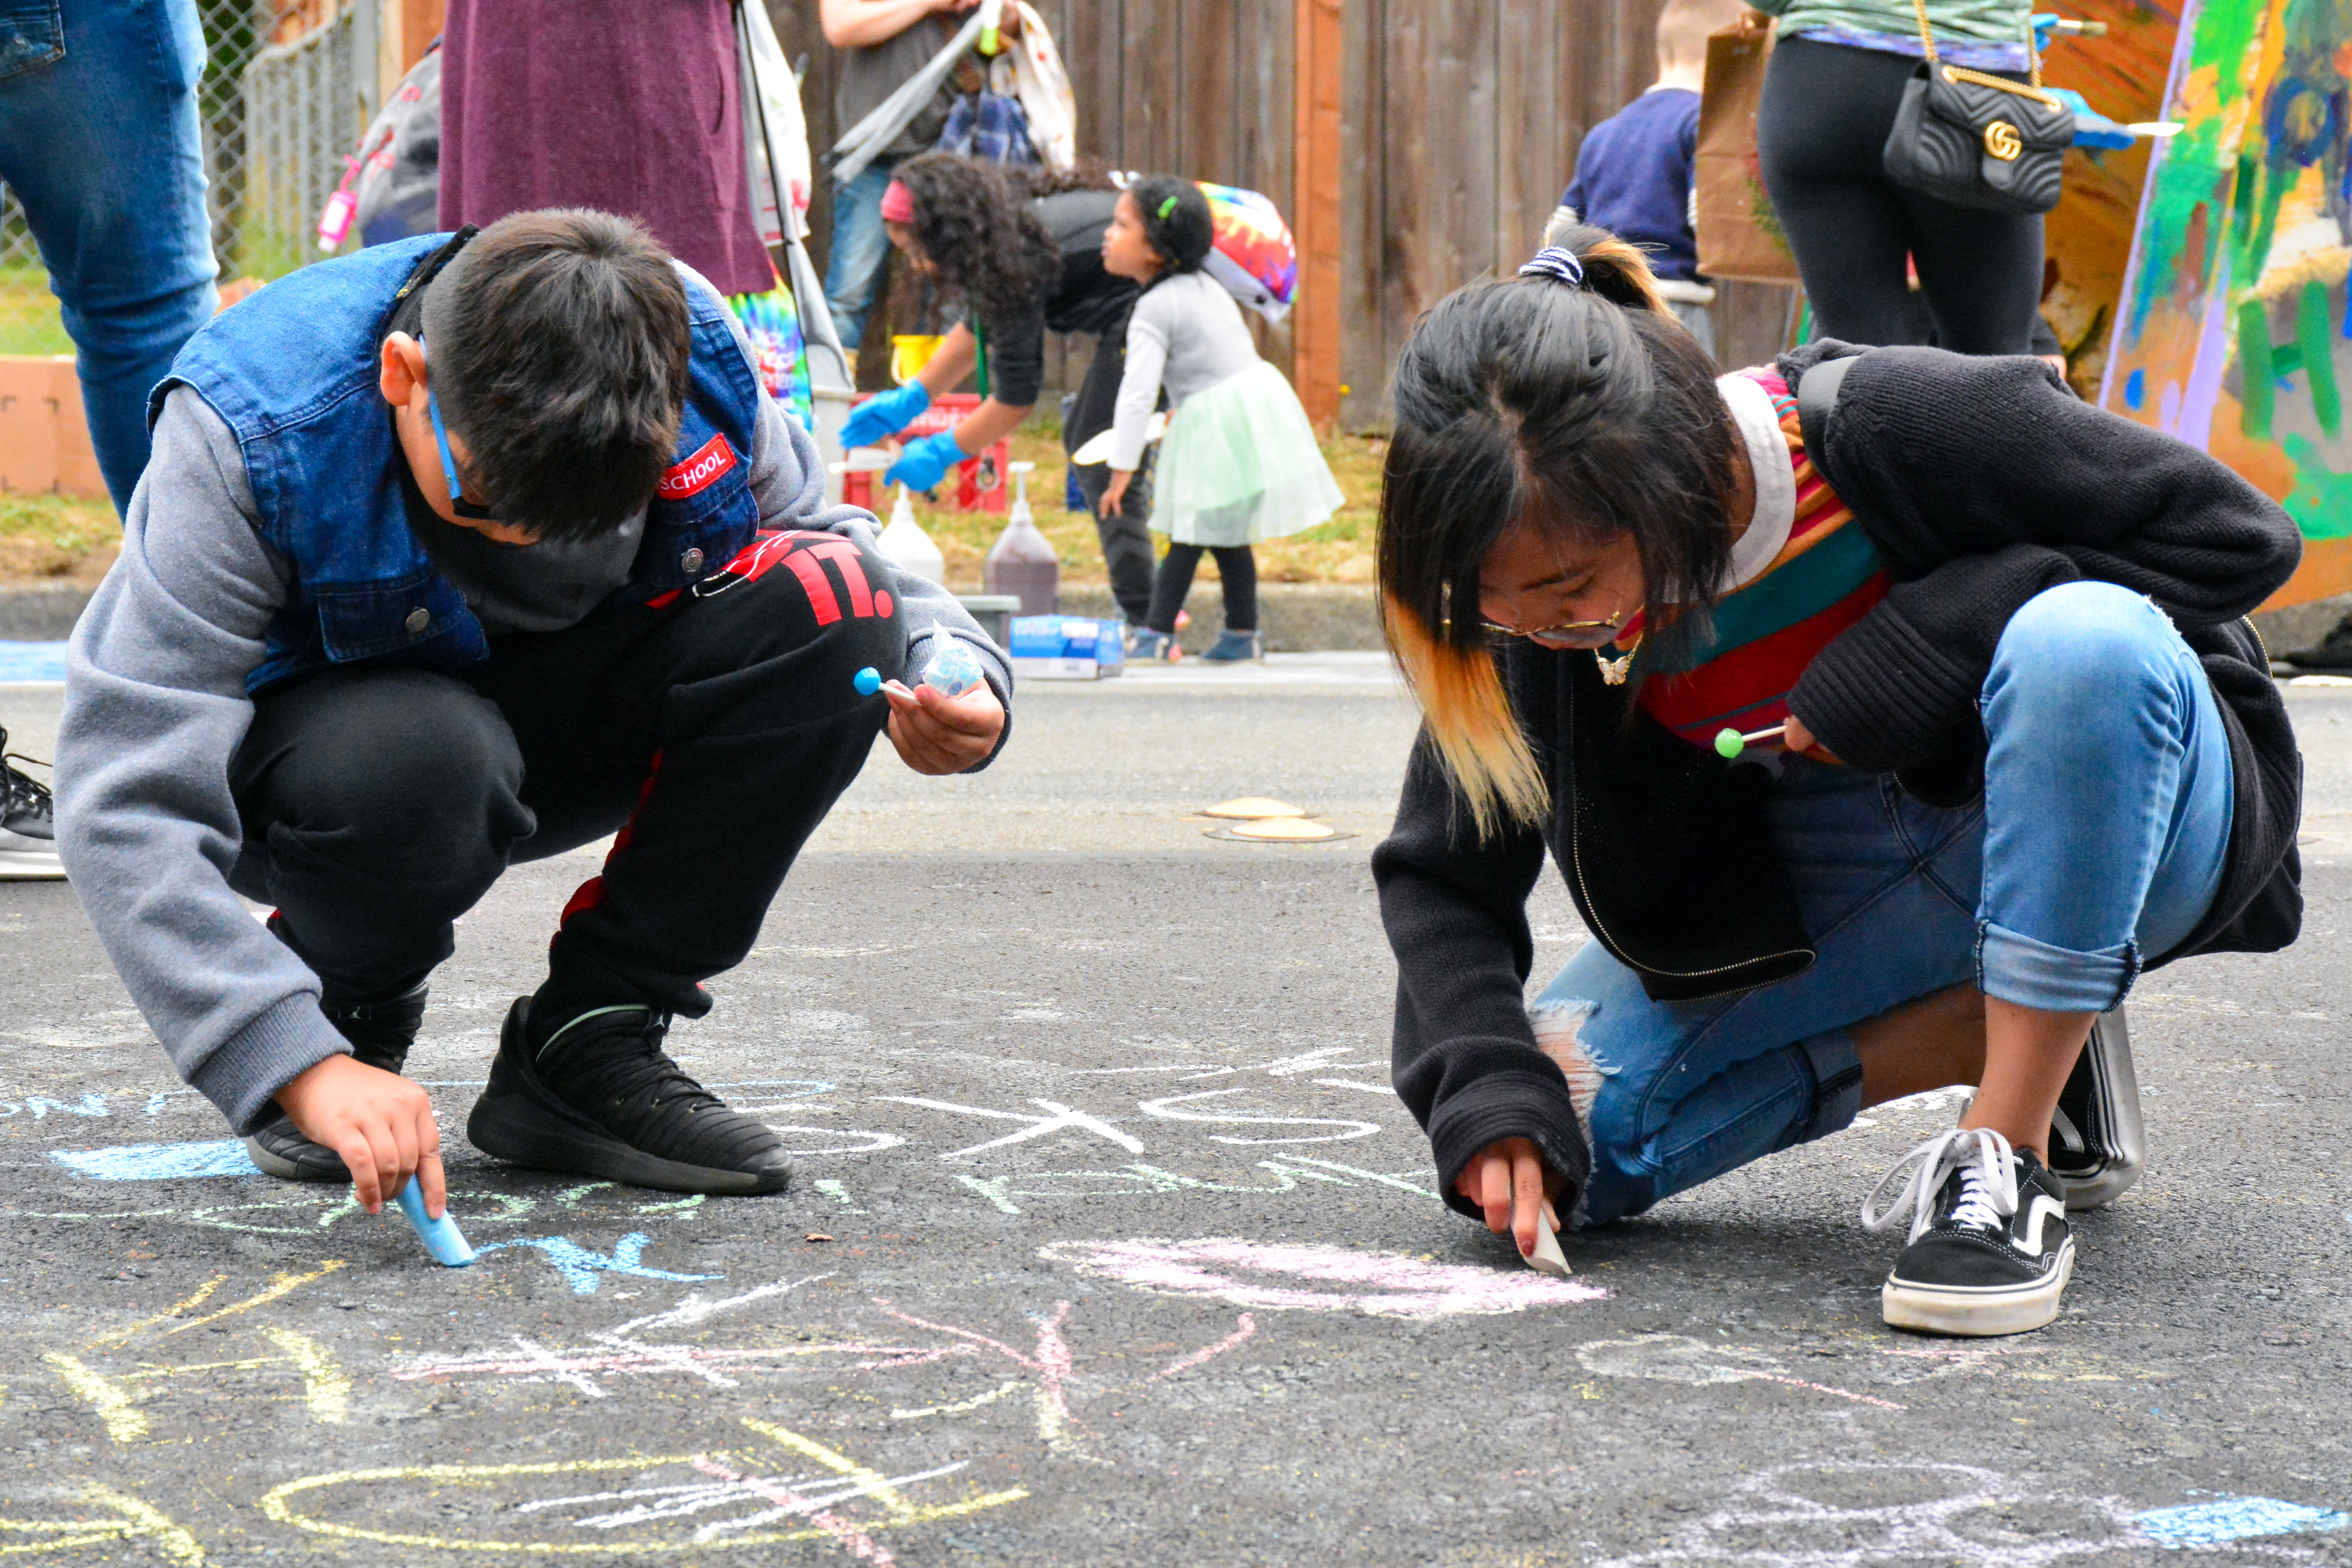 Kids create art with chalk on asphalt